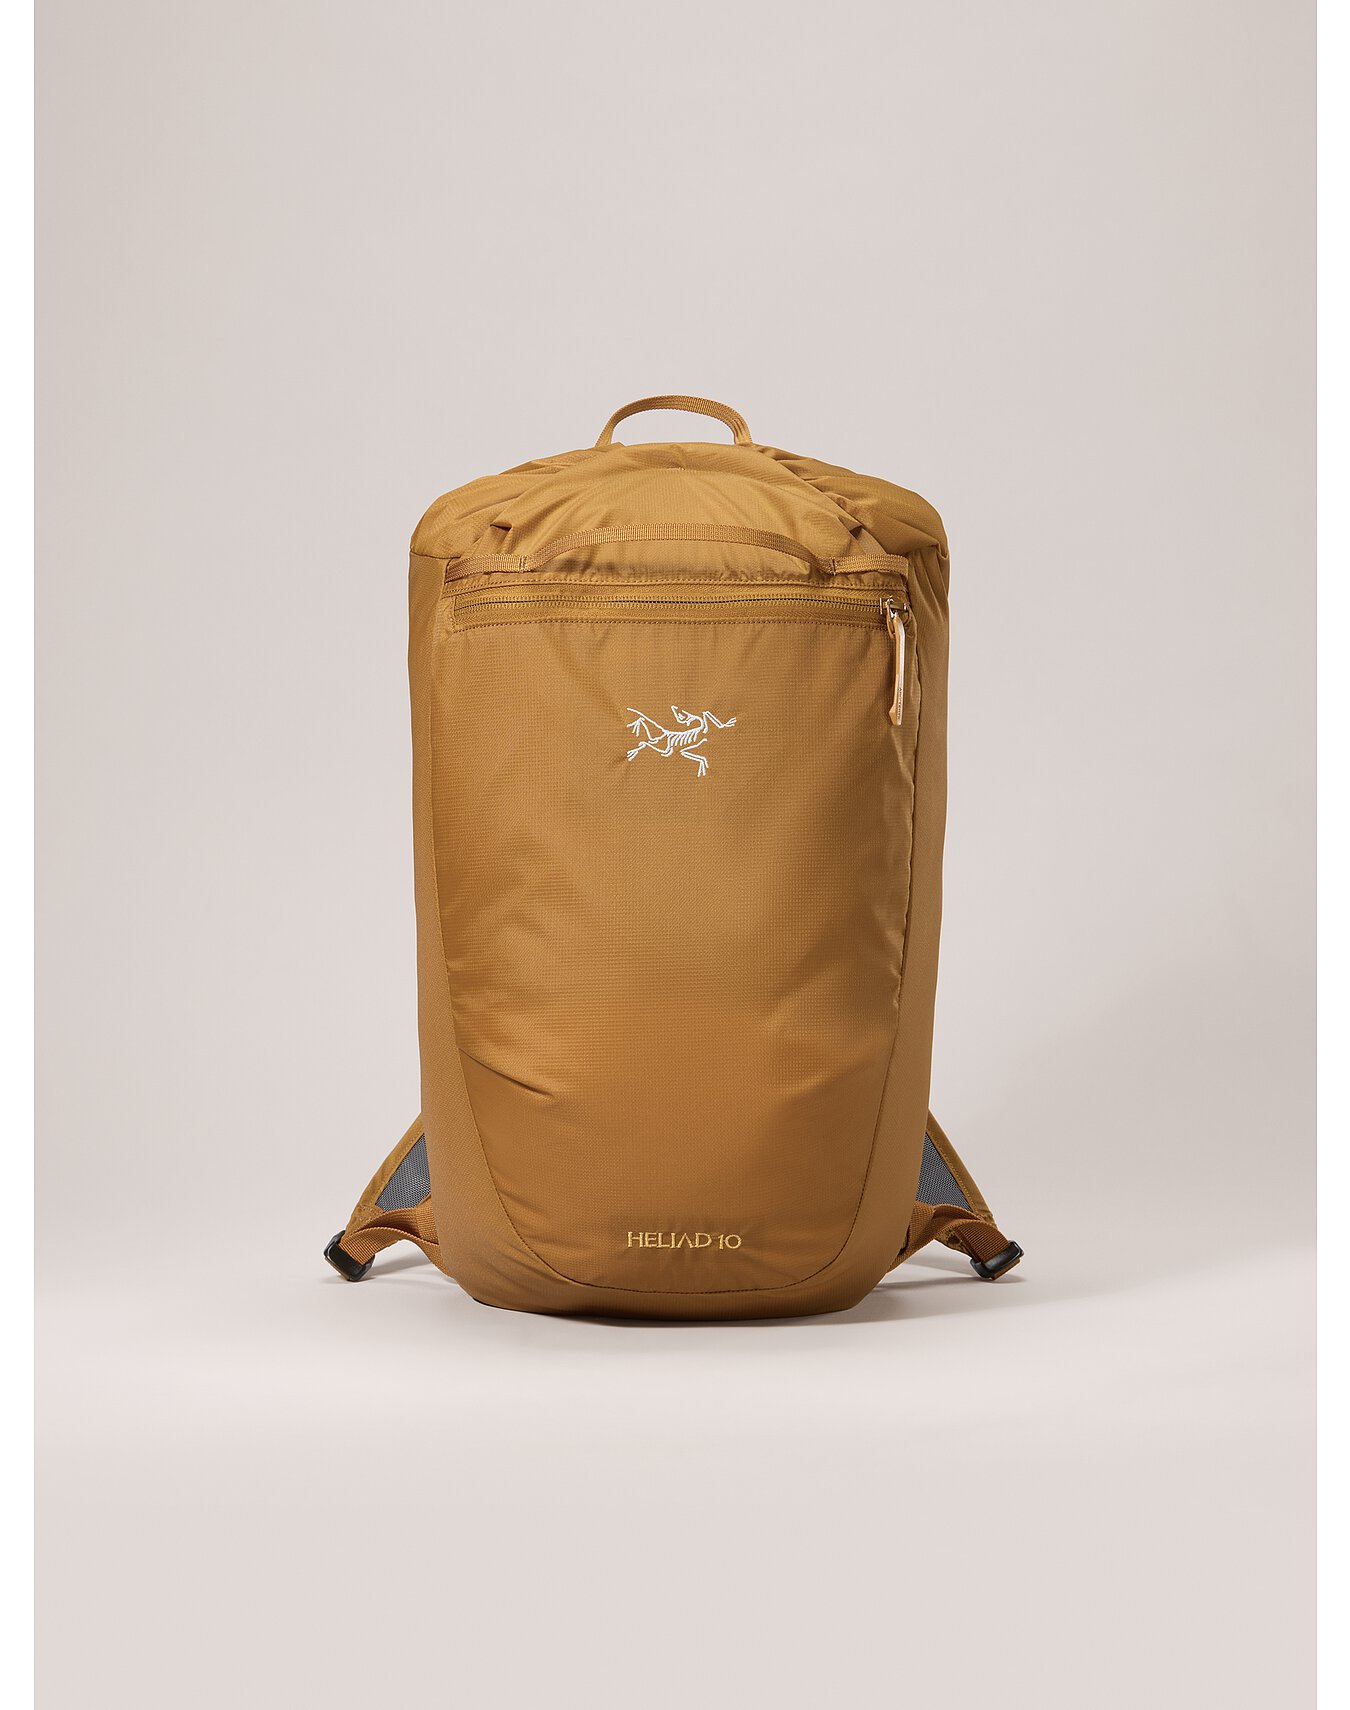 Heliad 10 Backpack | Arc'teryx